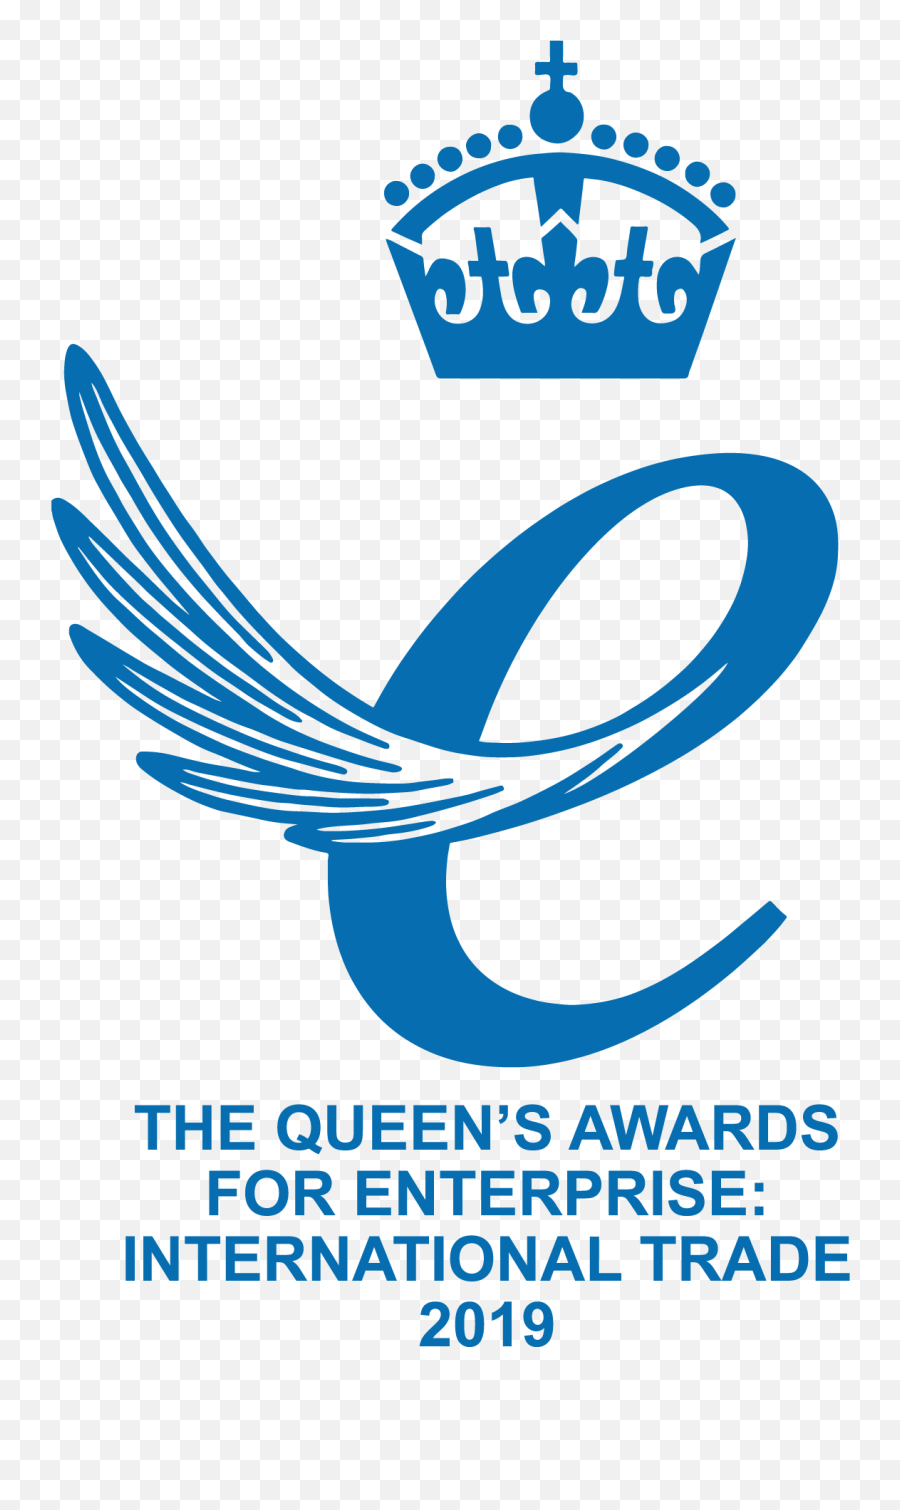 Q5 Wins Queenu0027s Award For International Trade - Awards For Enterprise 2019 Png,Award Png